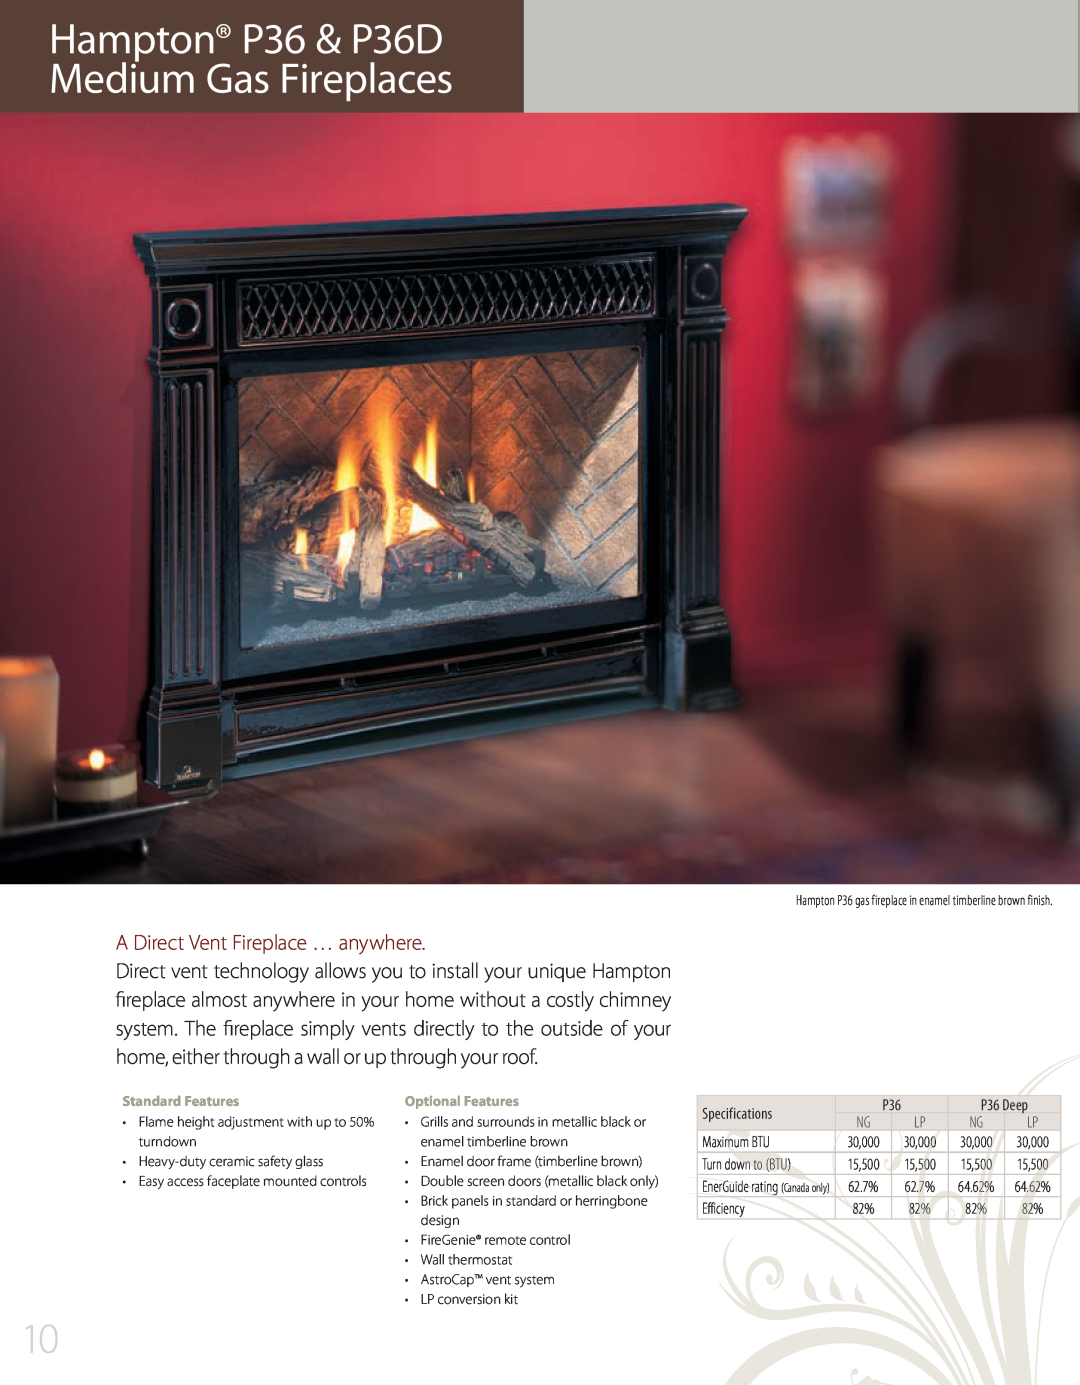 Regency H25, H200, H15, H300 Hampton P36 & P36D Medium Gas Fireplaces, A Direct Vent Fireplace … anywhere, Standard Features 